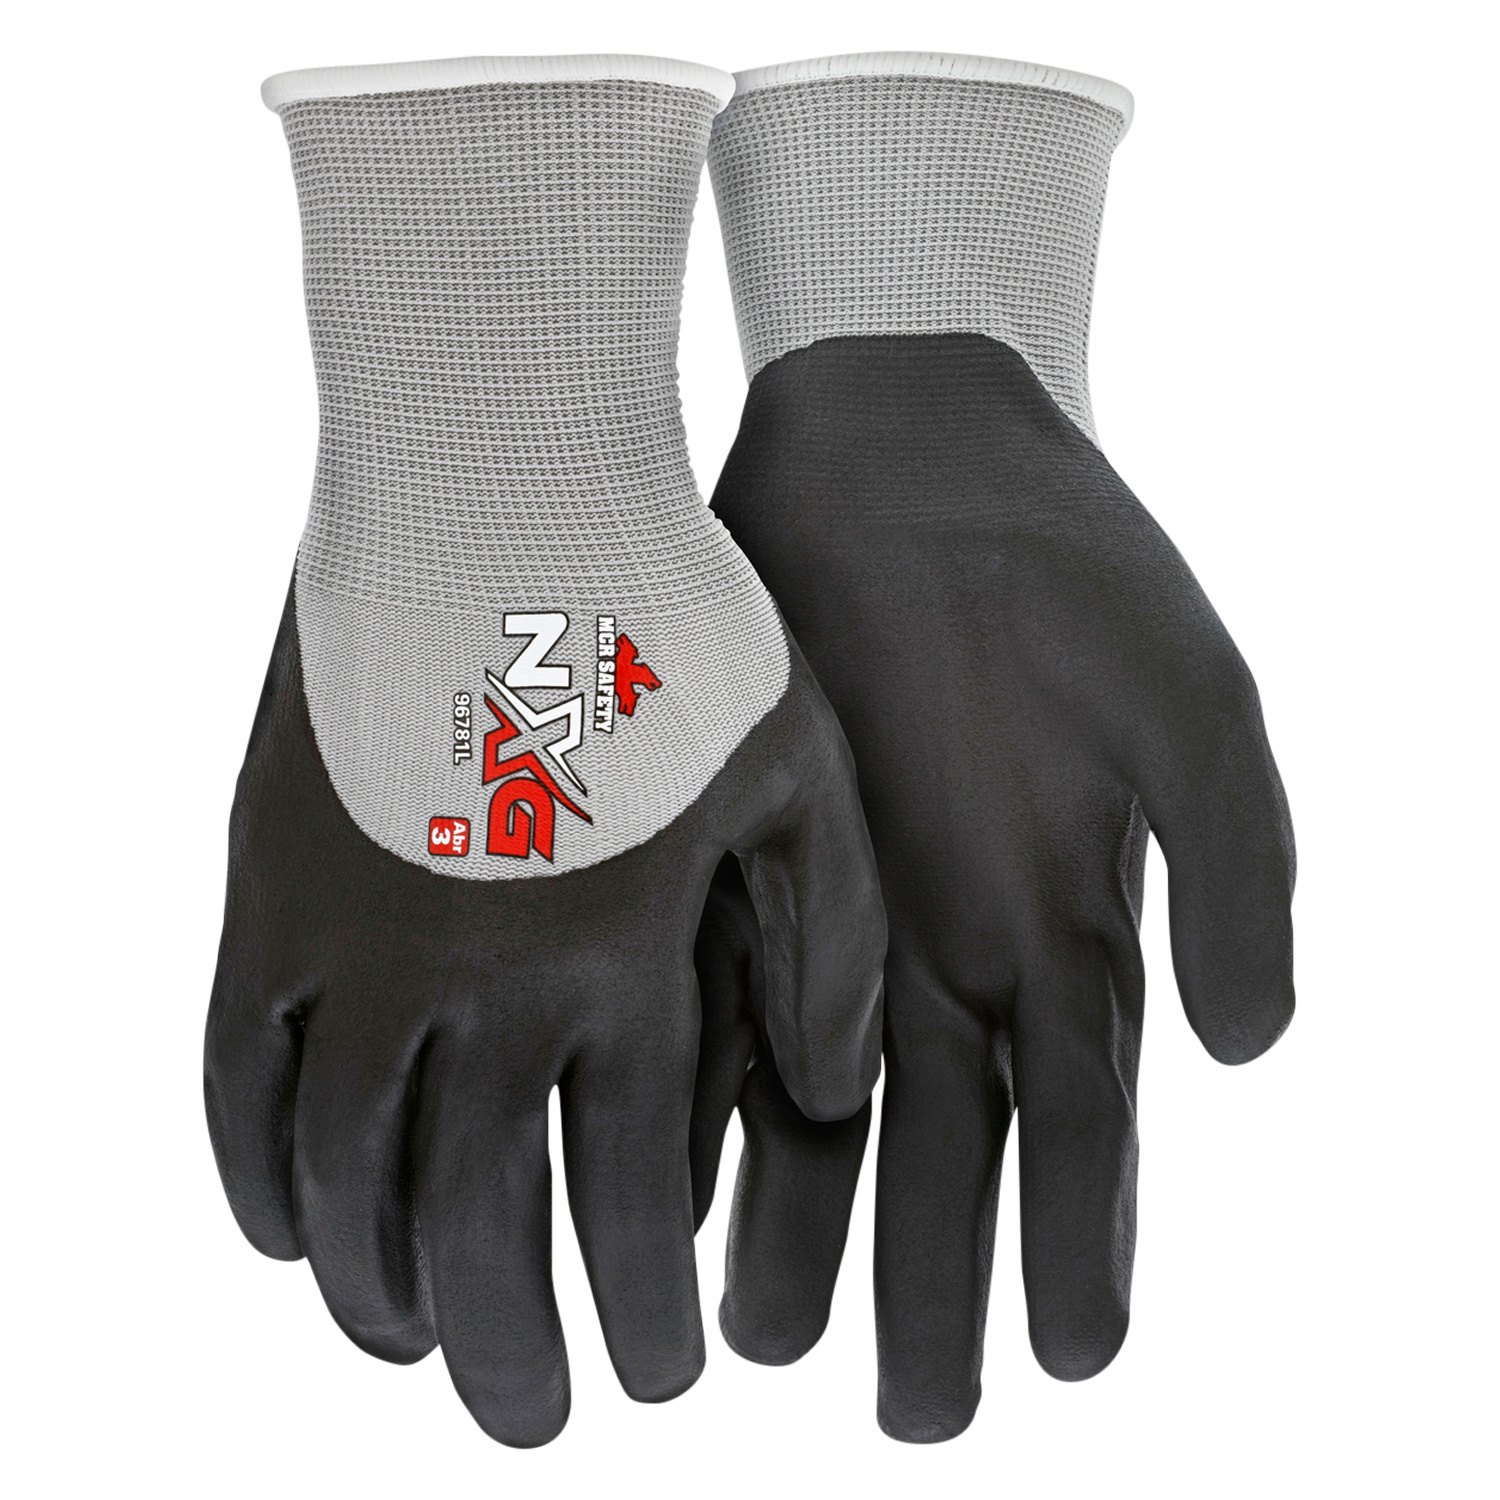 black nitrile gloves medium